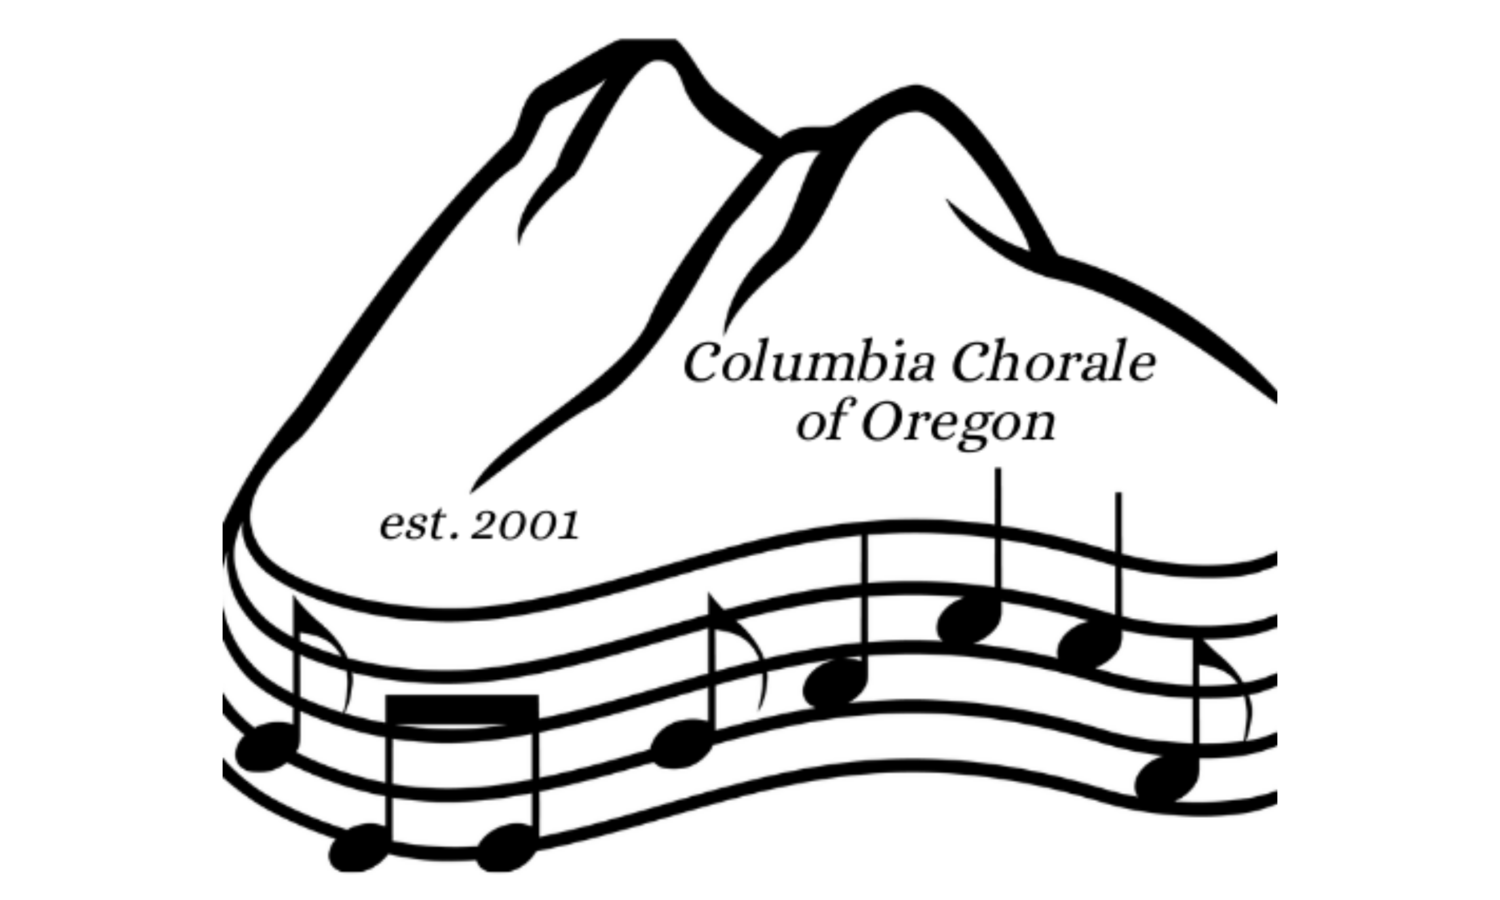 Columbia Chorale of Oregon